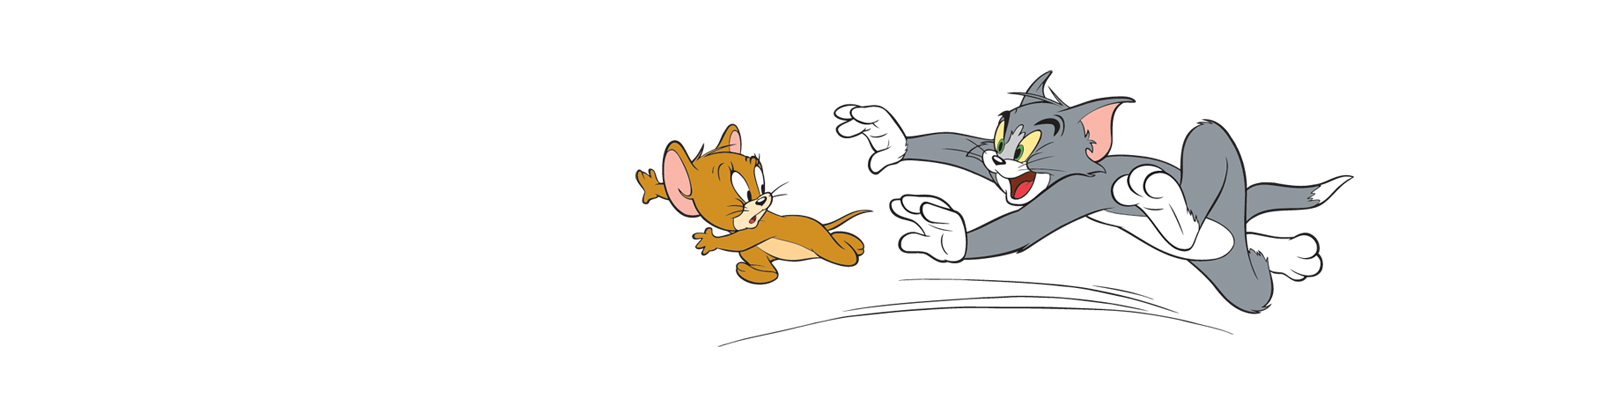 Мышки убегают от кошки. Том гонится за Джерри. Том бежит. Джерри бежит. Джерри убегает от Тома.